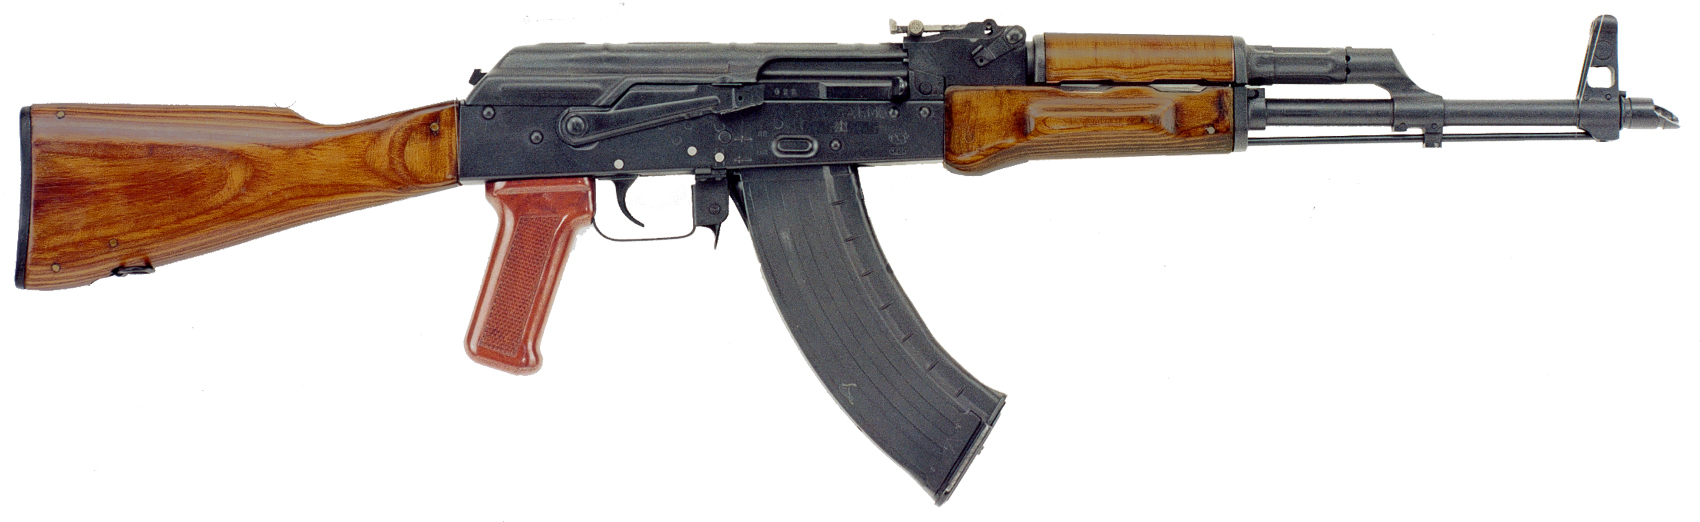 Ficheiro:INSAS Standard Issue Assualt Rifle.JPG – Wikipédia, a